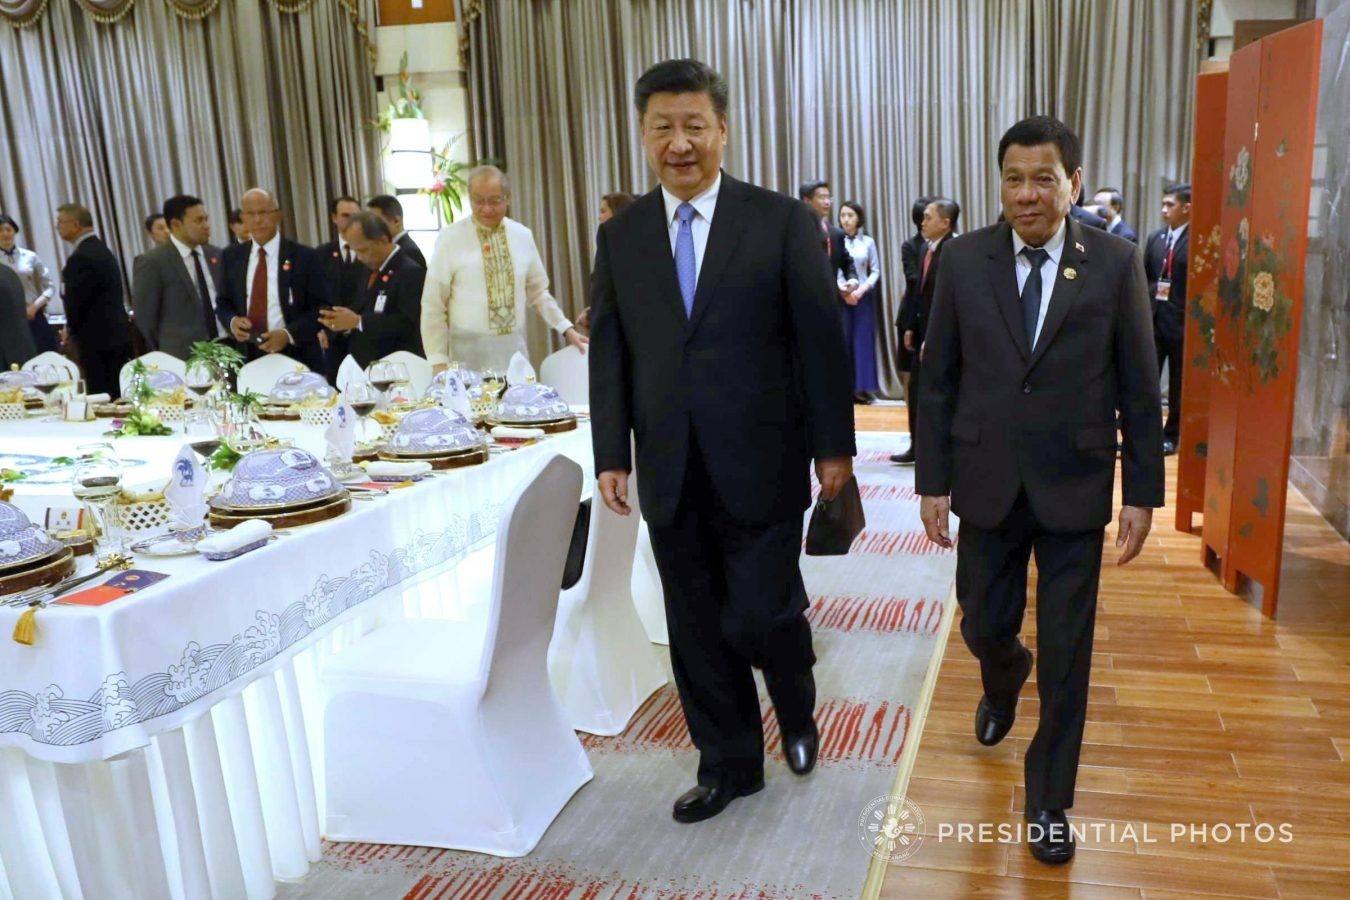 Cayetano compares Duterte, Xi to a 'siga'